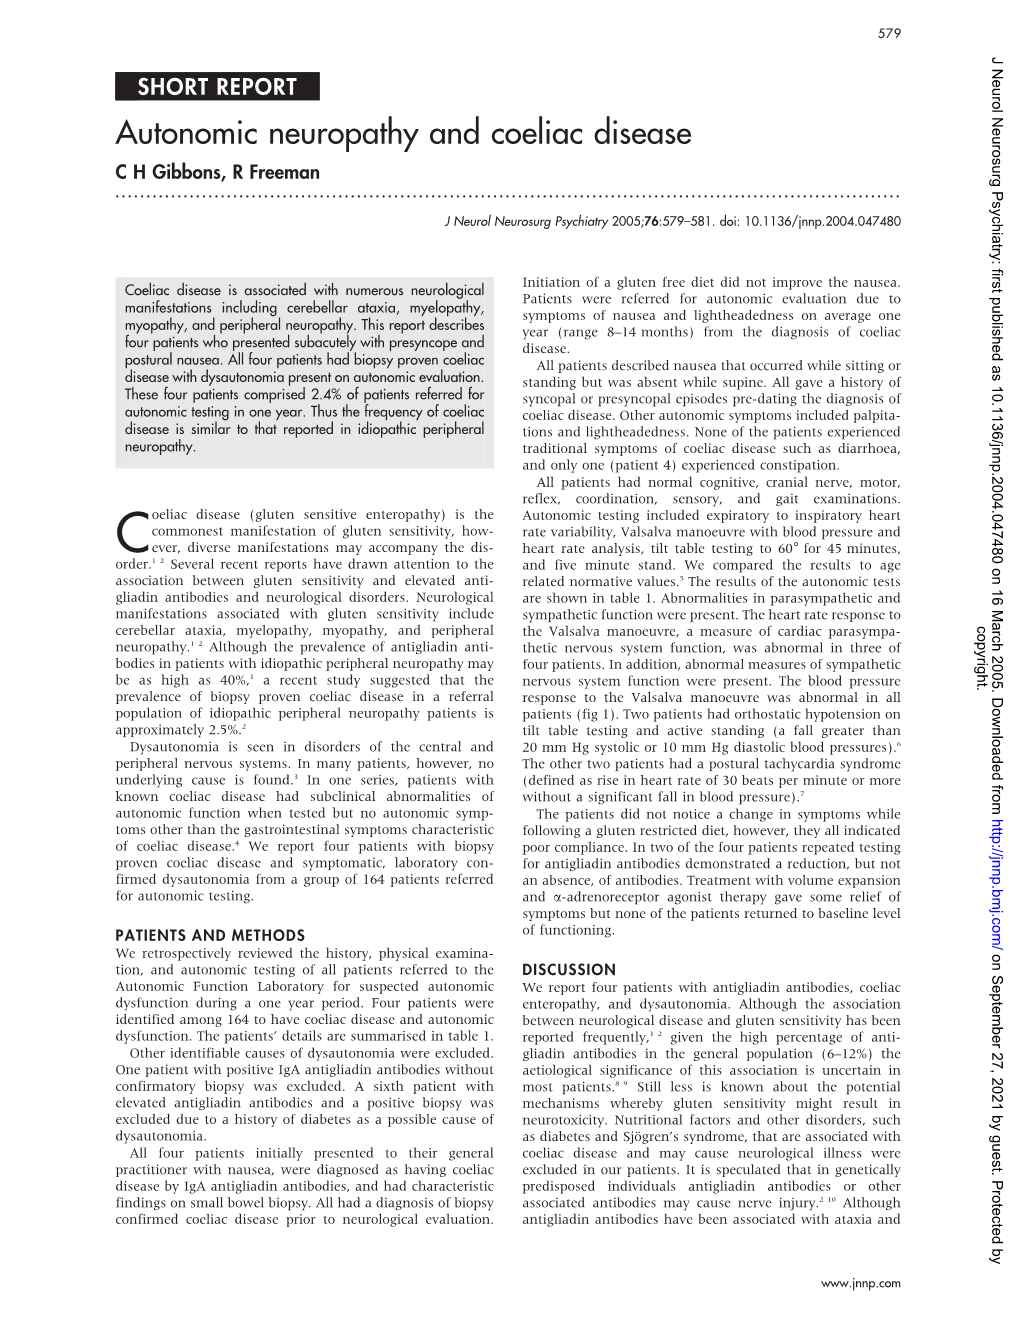 Autonomic Neuropathy and Coeliac Disease C H Gibbons, R Freeman